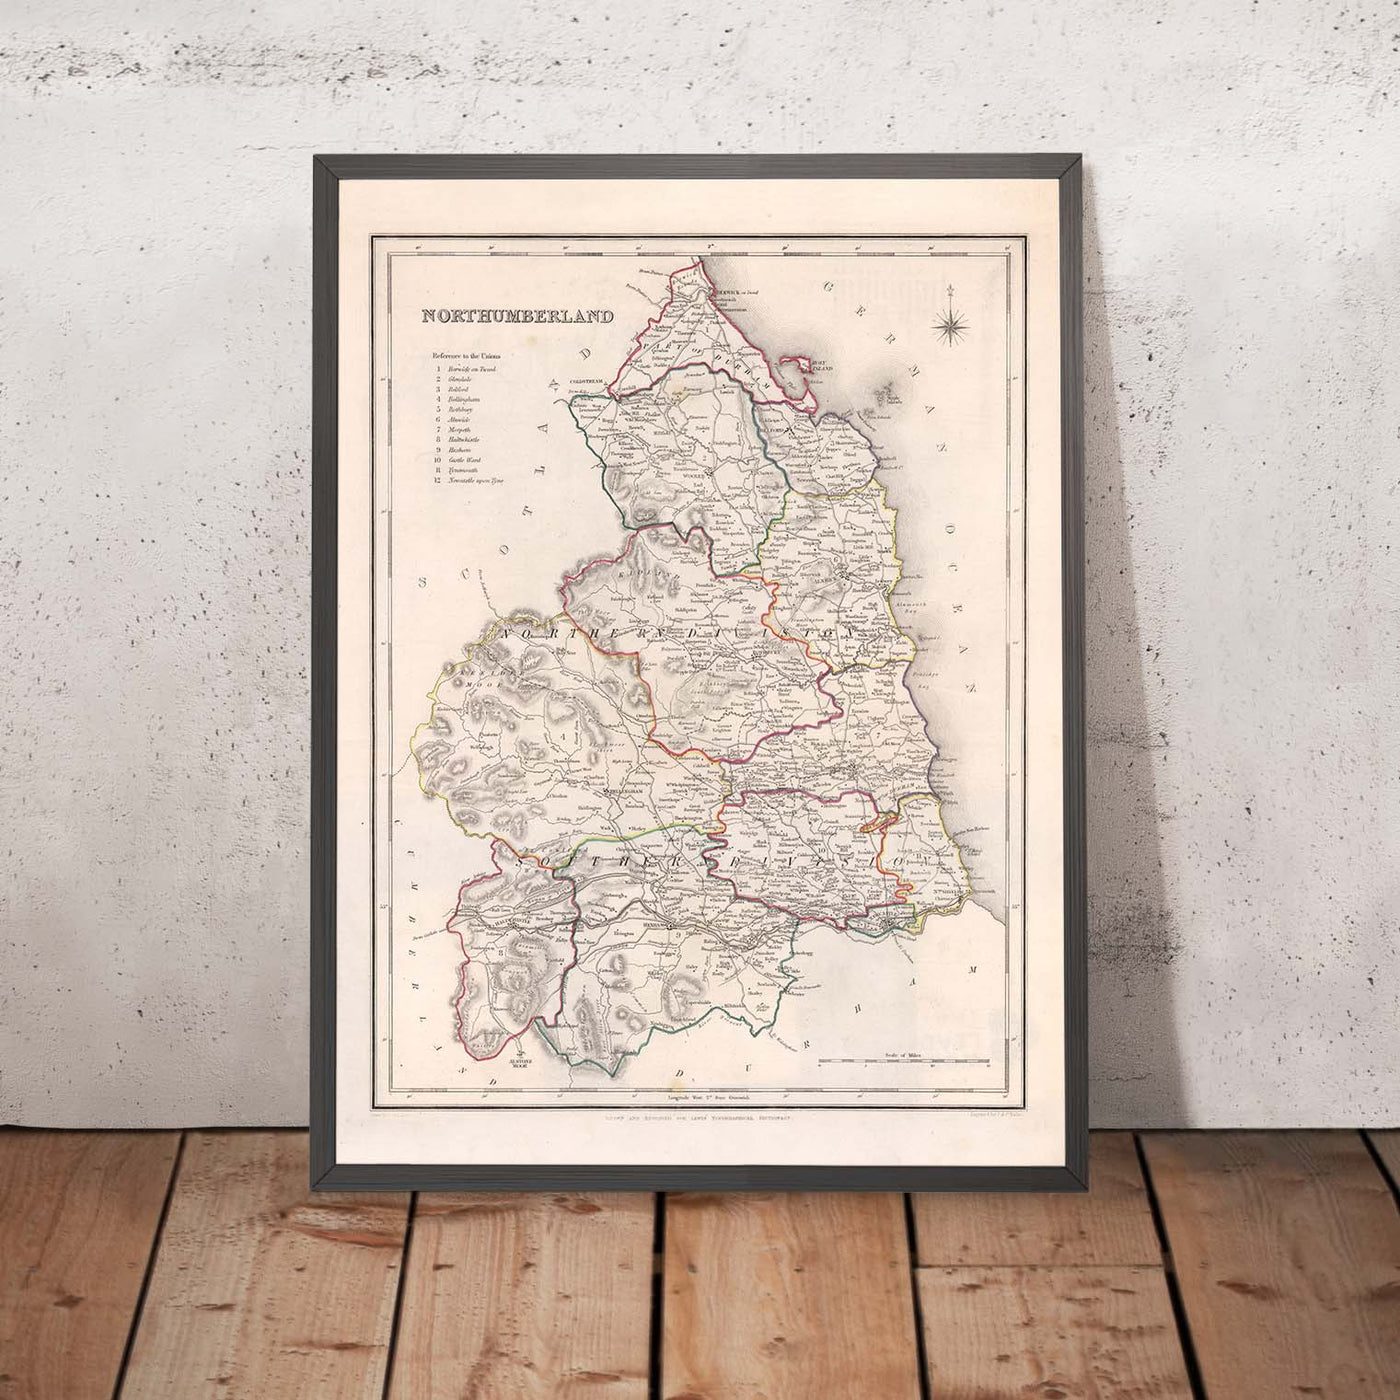 Old Map of Northumberland by Samuel Lewis, 1844: Newcastle upon Tyne, Blyth, Cramlington, Ashington, and Bedlington